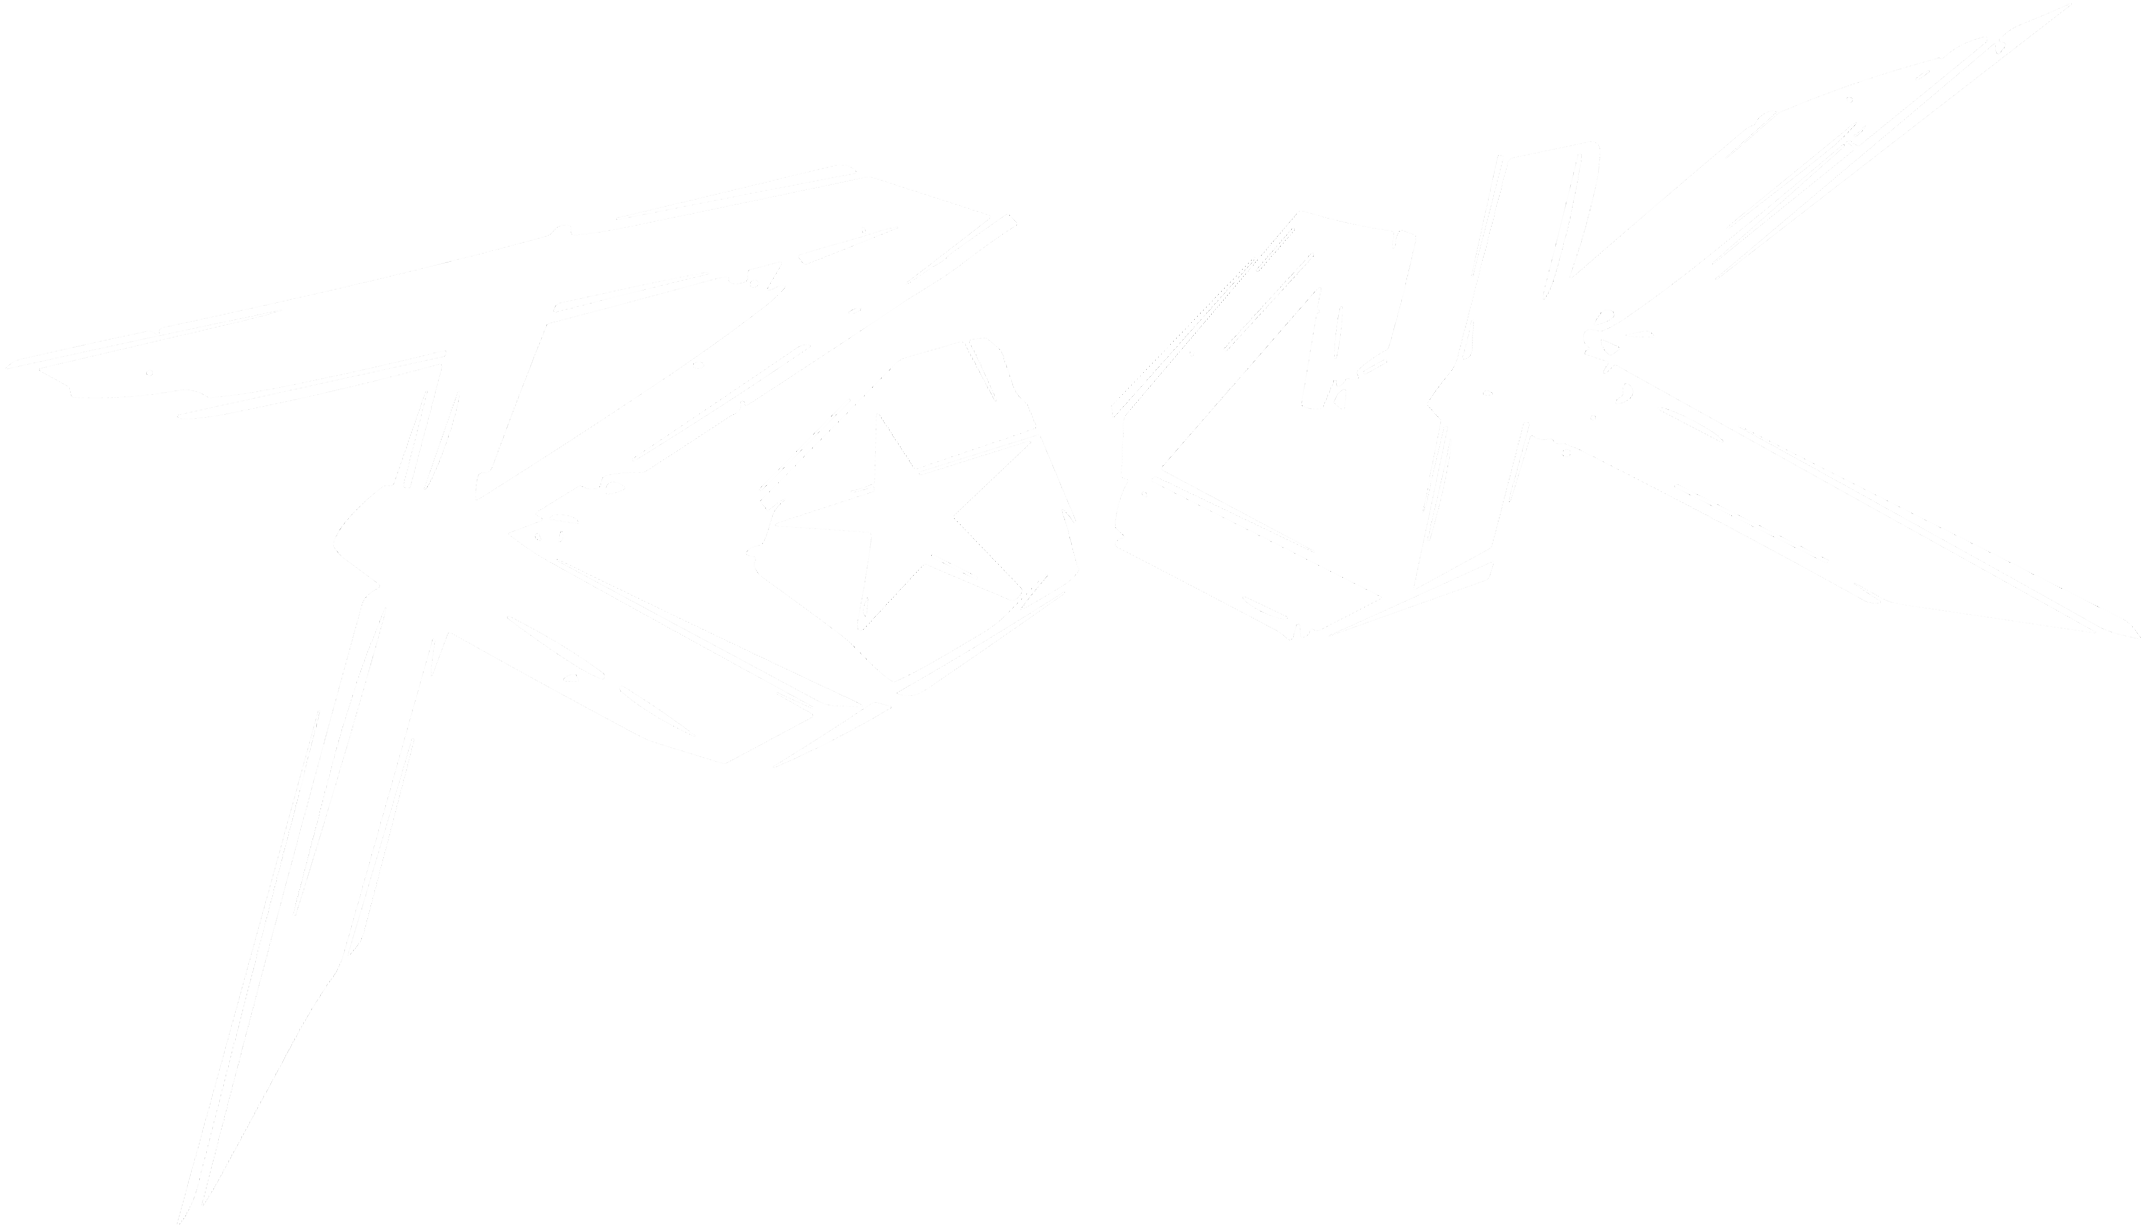 The Rock Symphony Orchestra